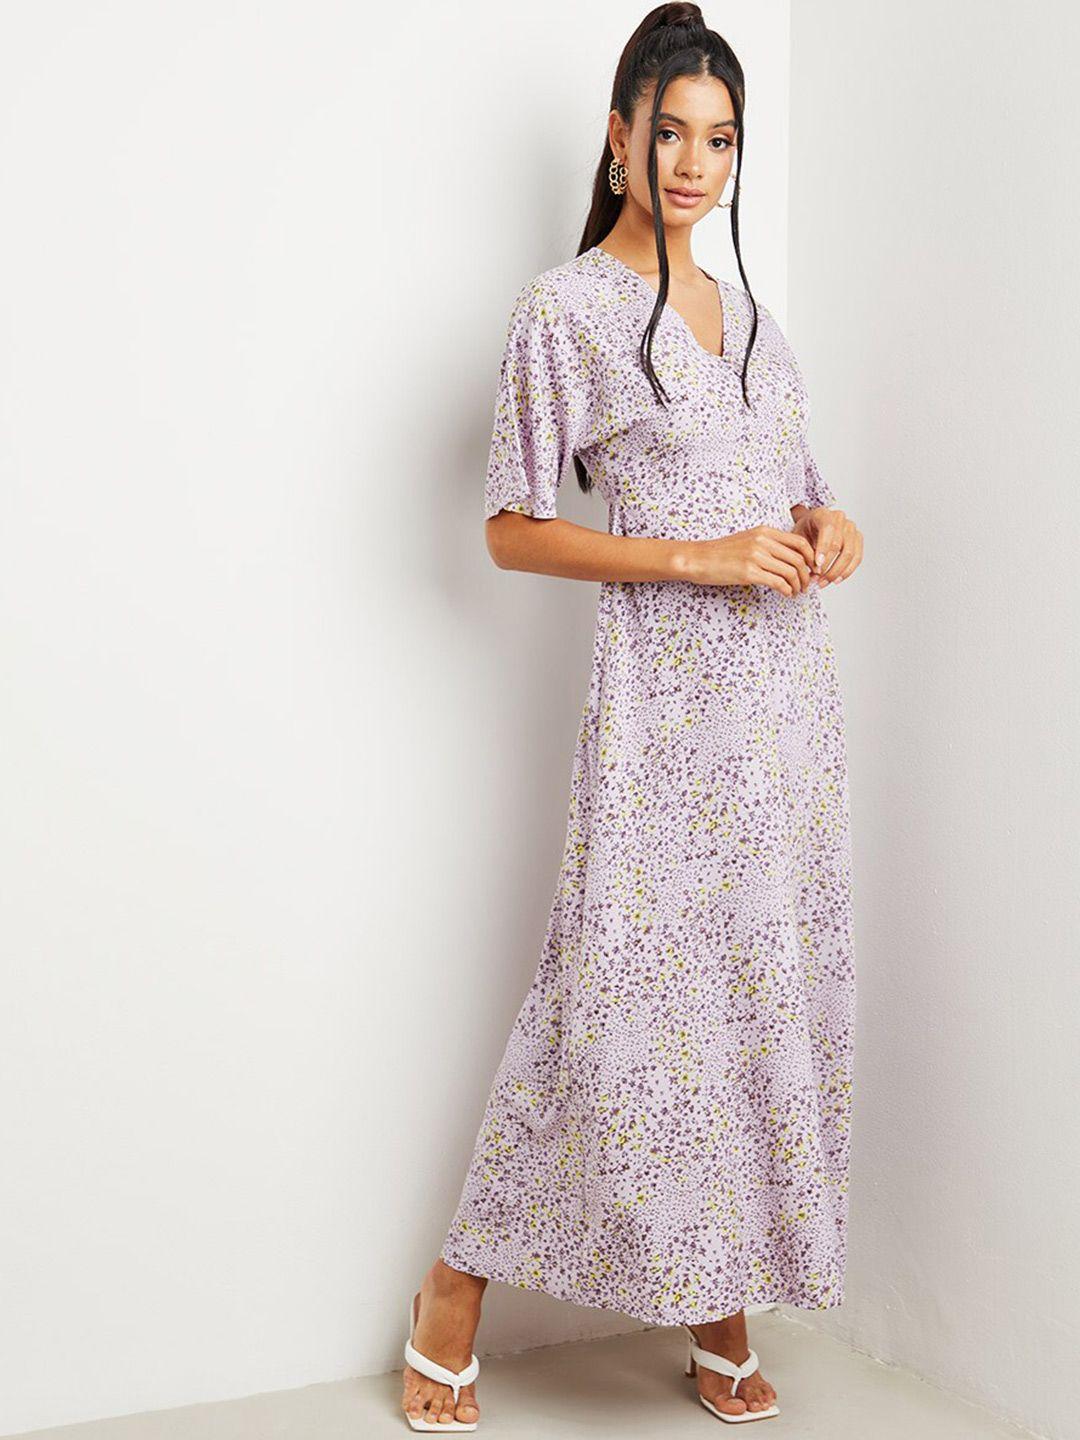 styli lavender floral dress